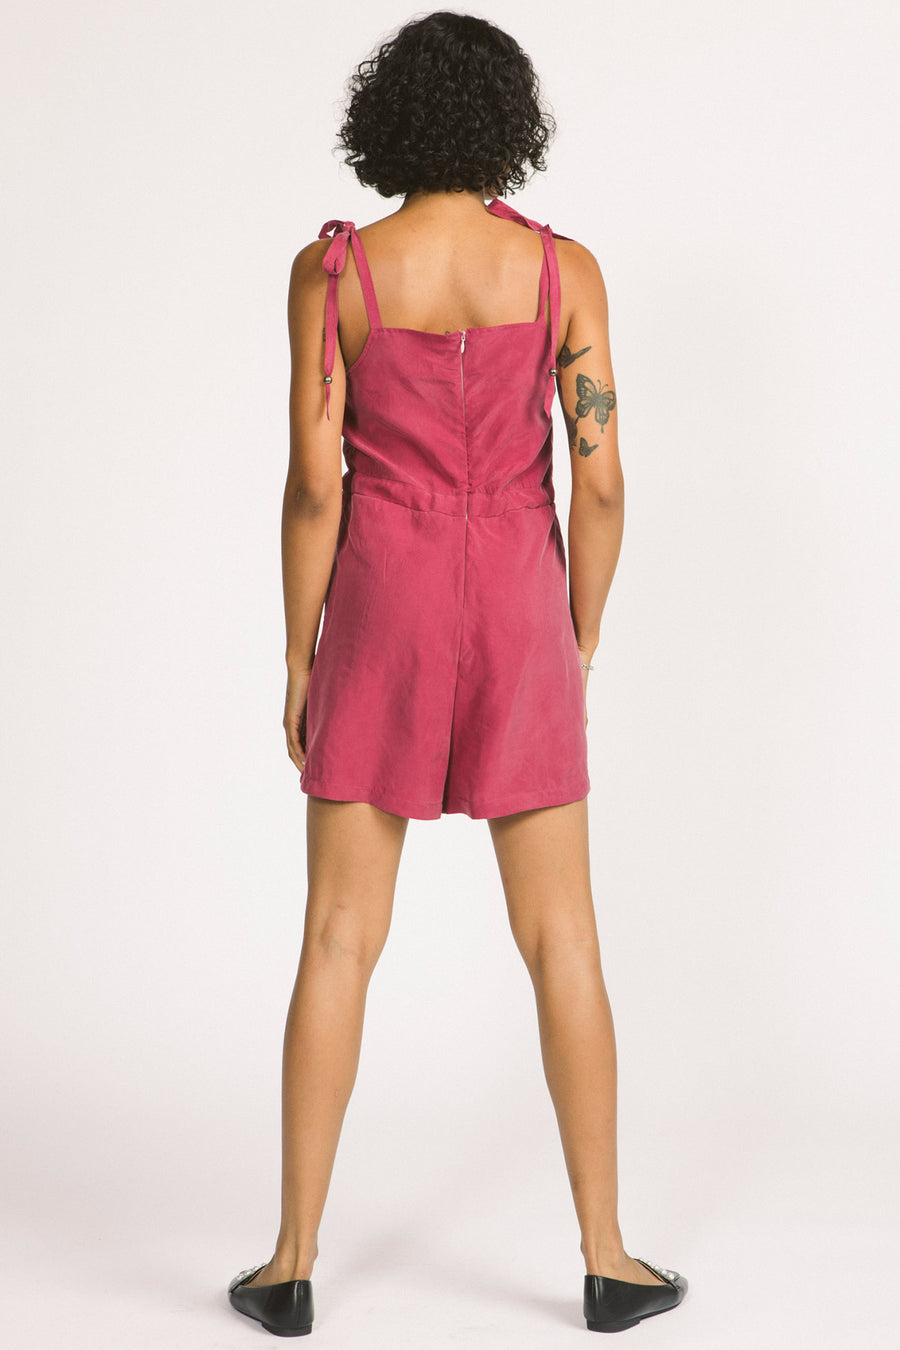 Back view of woman wearing magenta pink short Meara short romper by Allison Wonderland. 